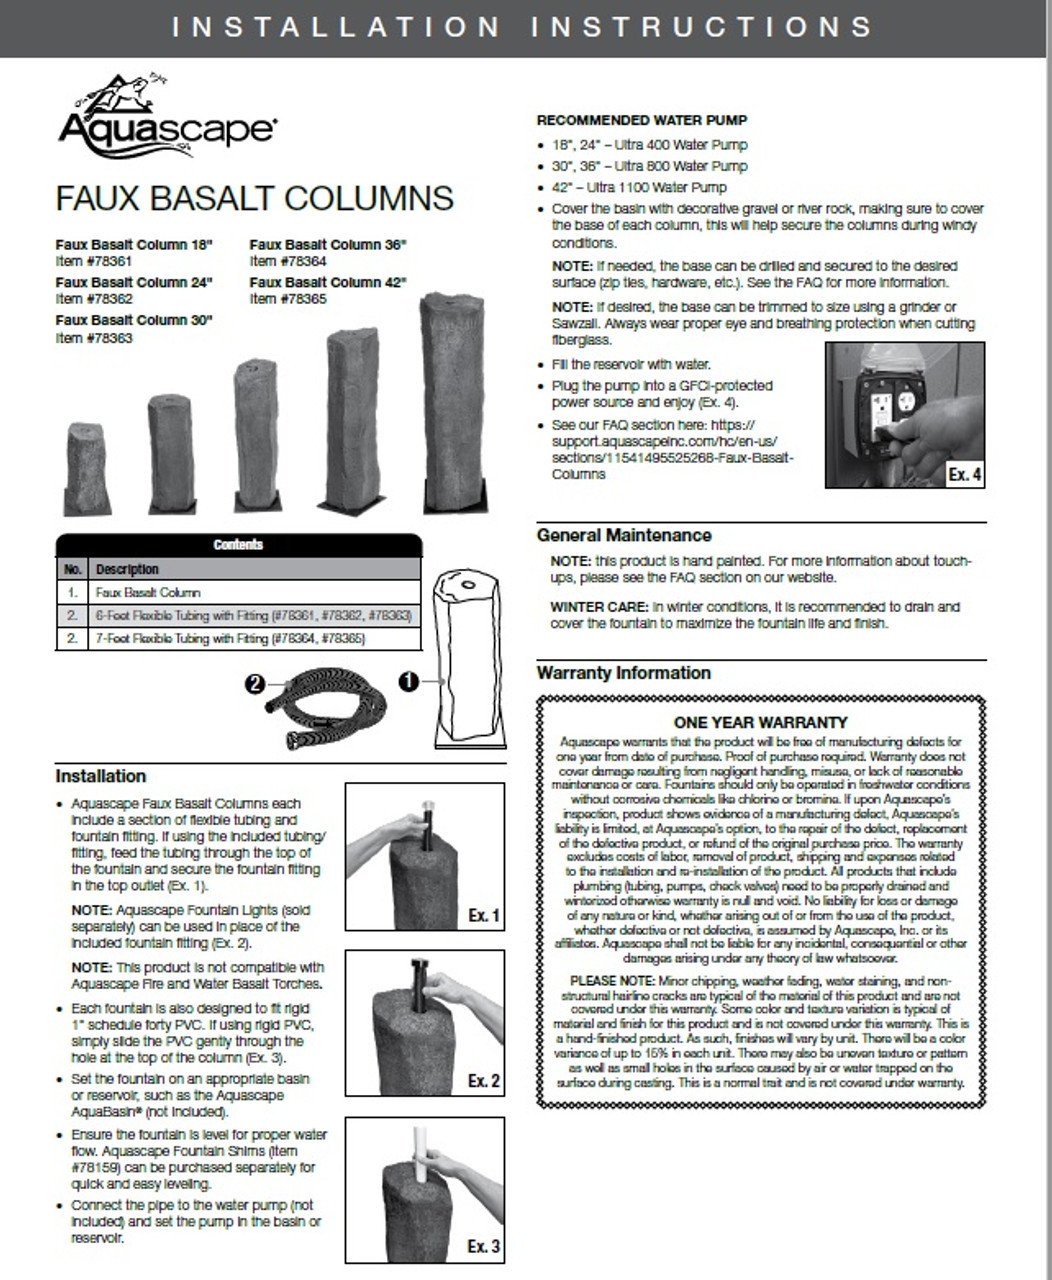 Aquascape Faux Basalt Column - 36"